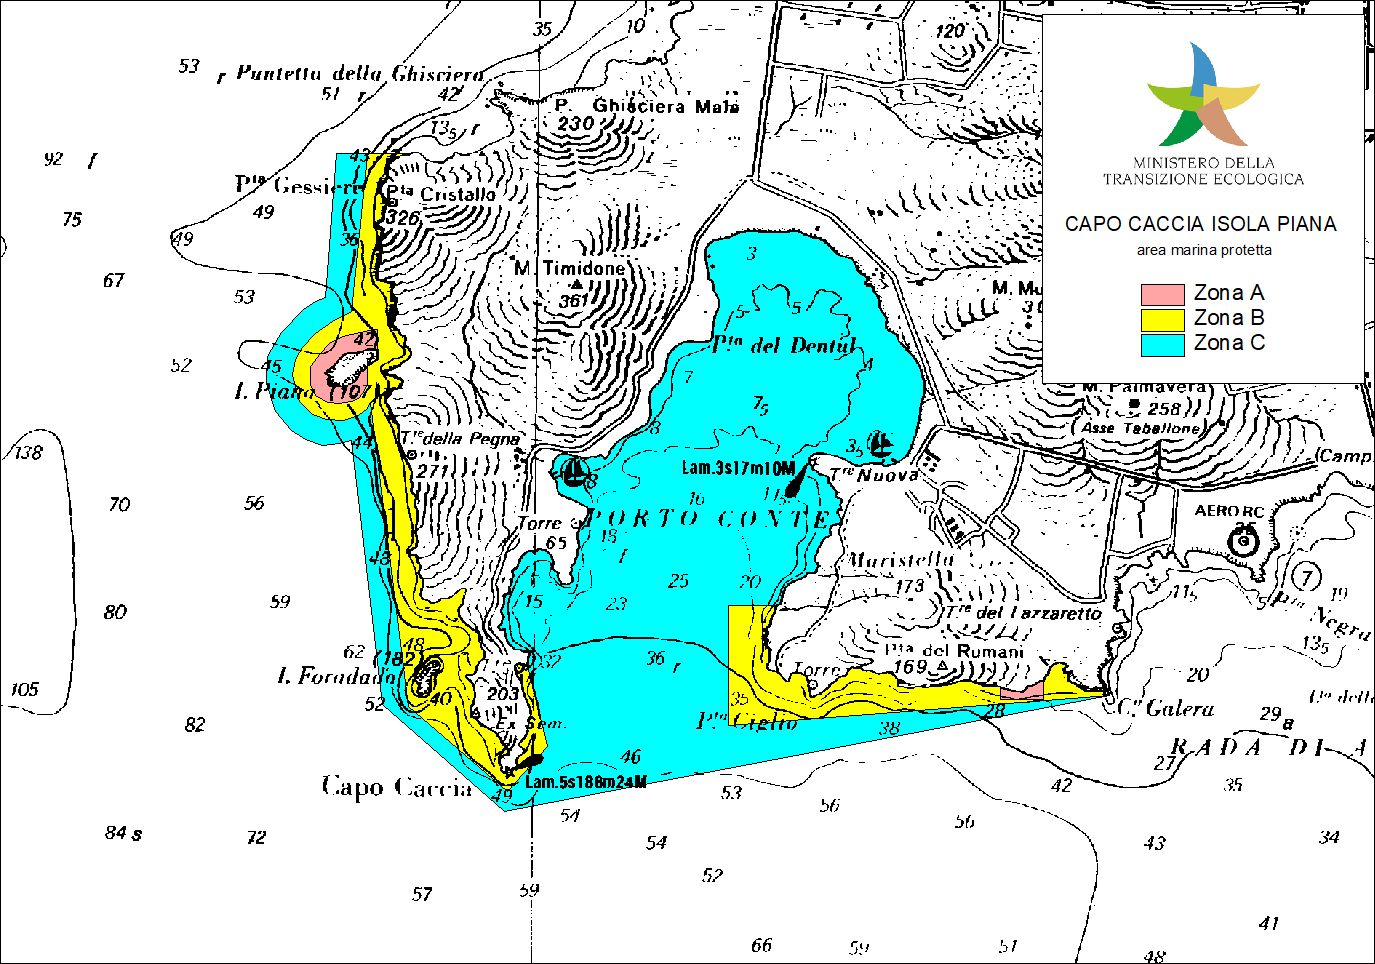 Area marina protetta - Capo Caccia Isola Piana